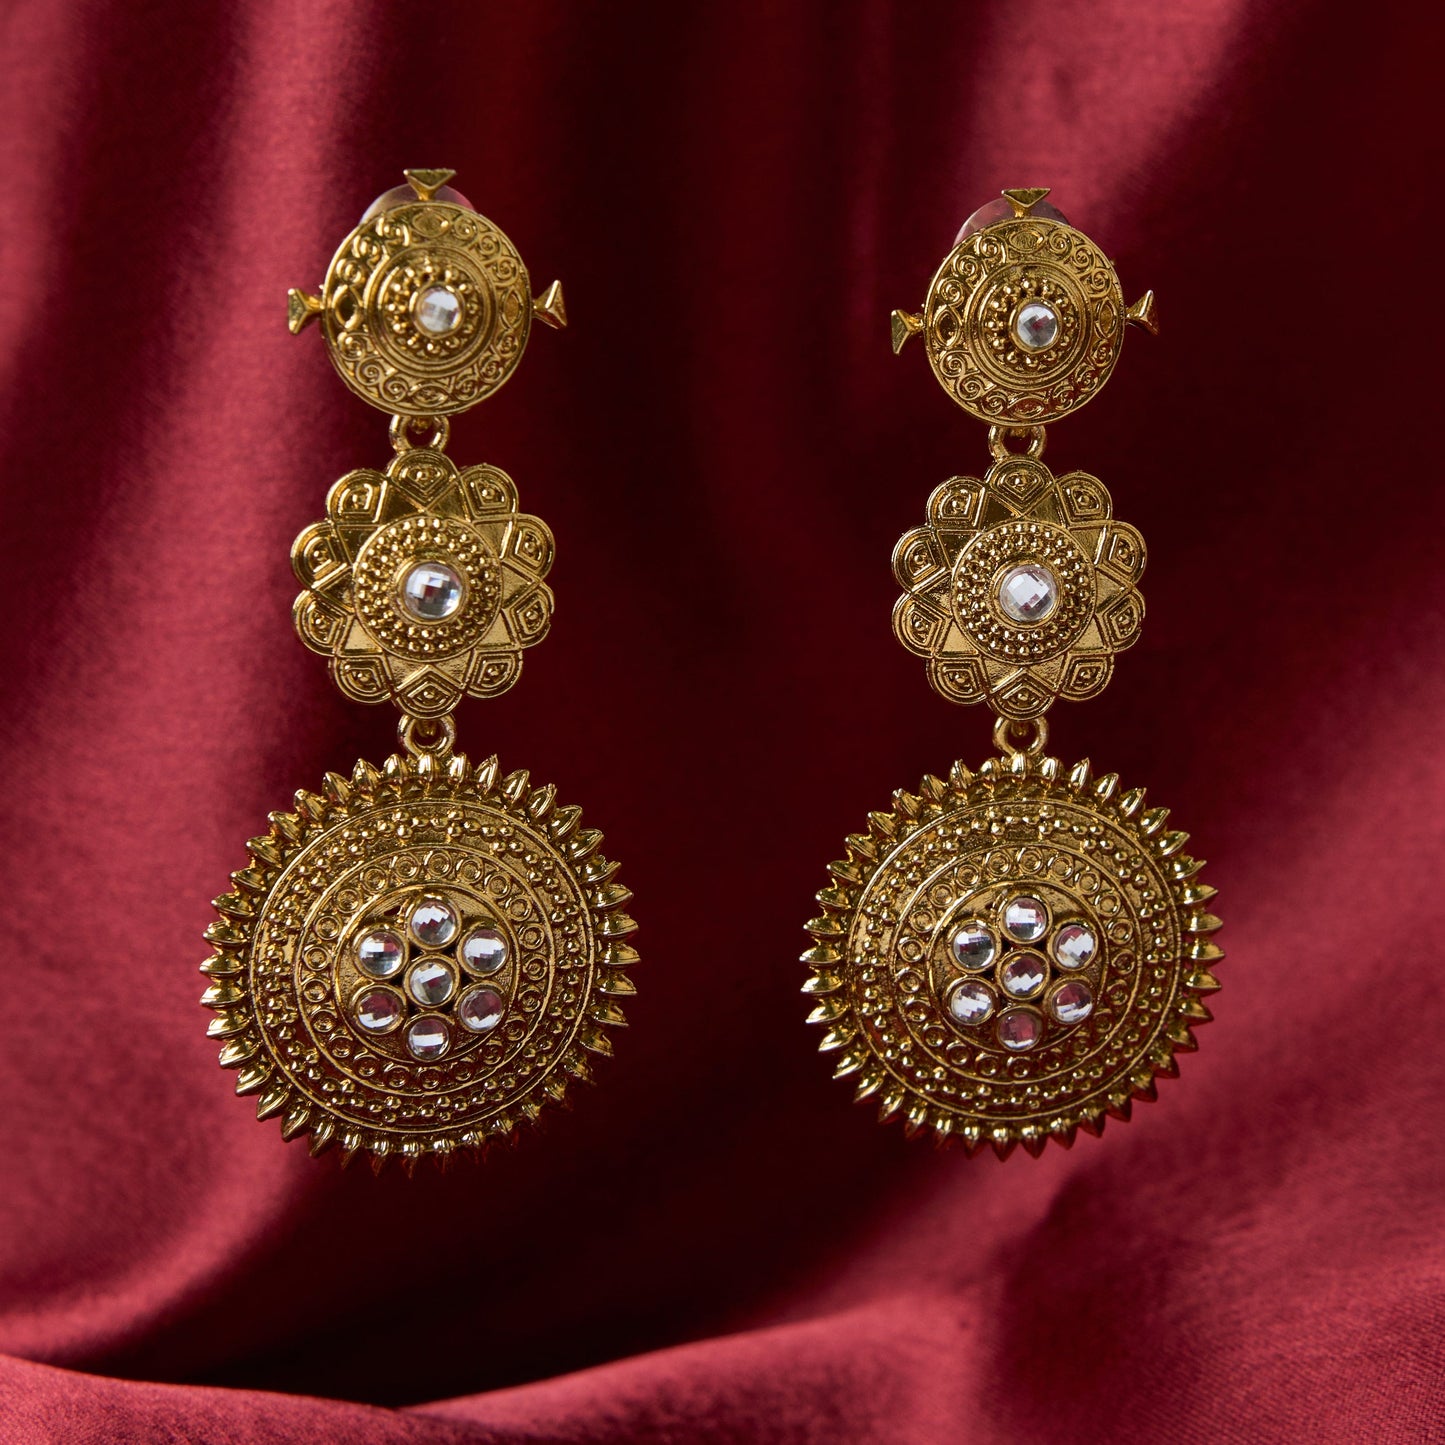 Moonstruck Antique Golden Traditional Ethnic Earrings For Women - www.MoonstruckINC.com